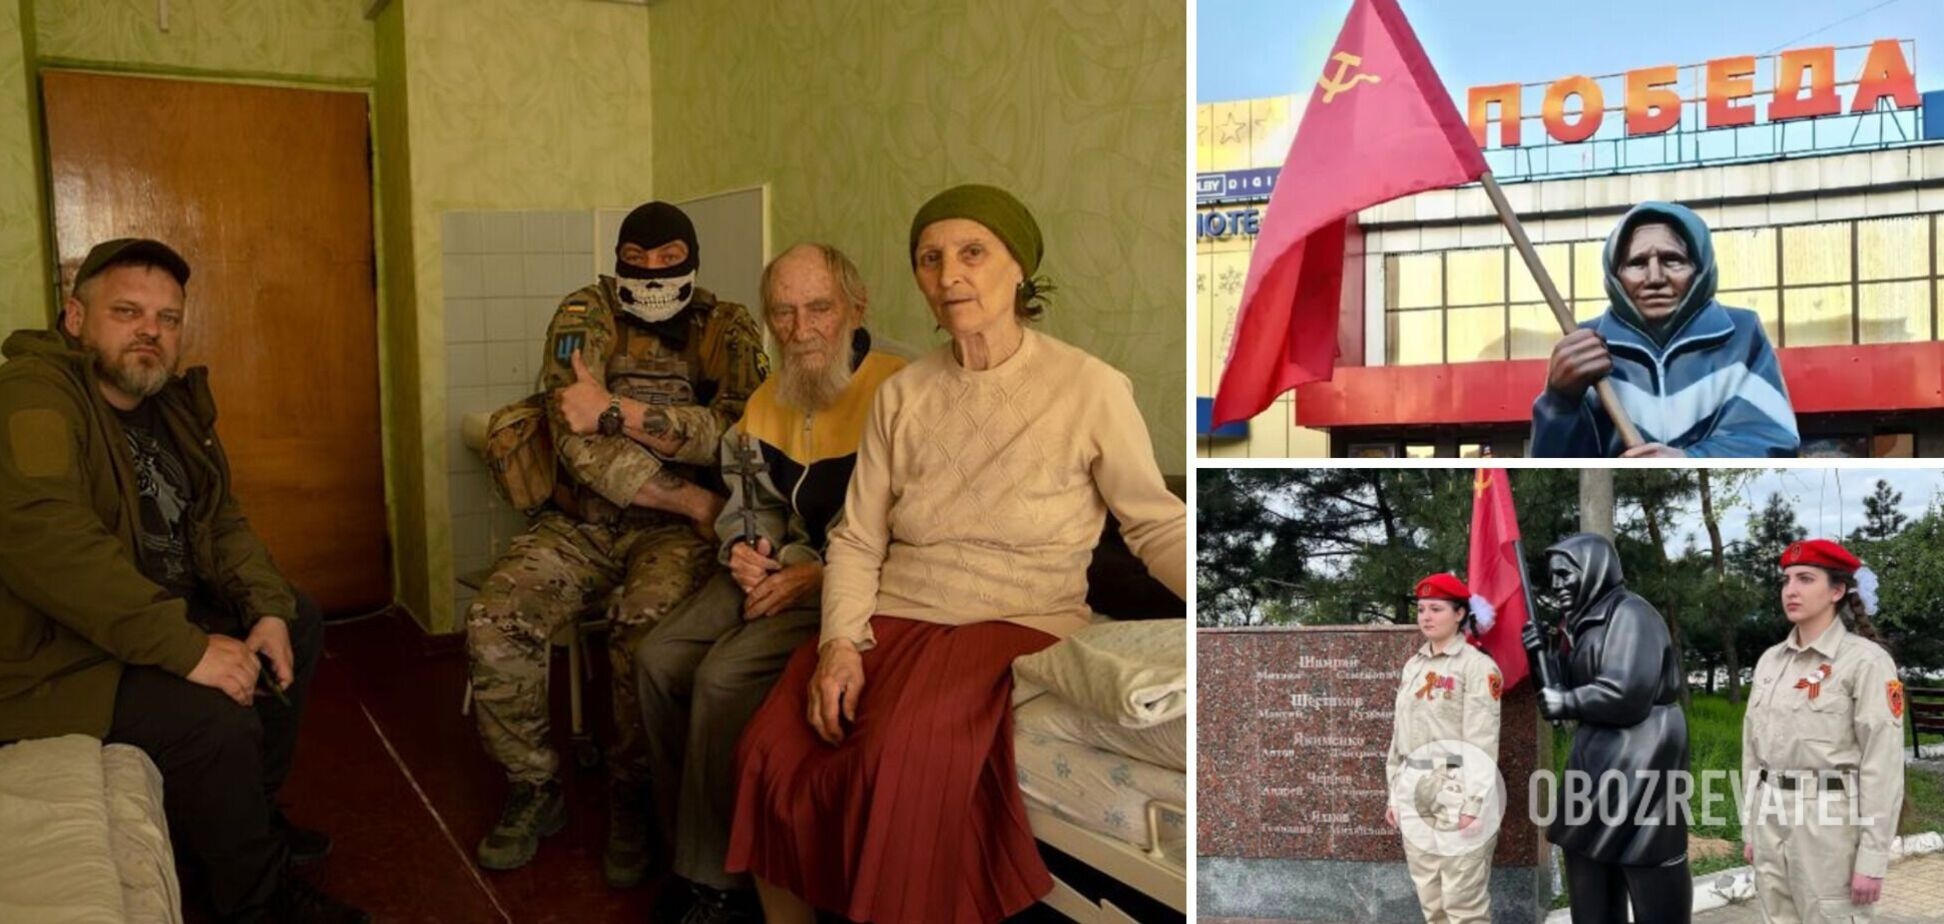 Бабушка с украины жива. Украинская бабушка с красным знаменем. Бабушка с советским флагом на Украине. Бабушка с красным флагом. Бабуля с флагом на Украине.